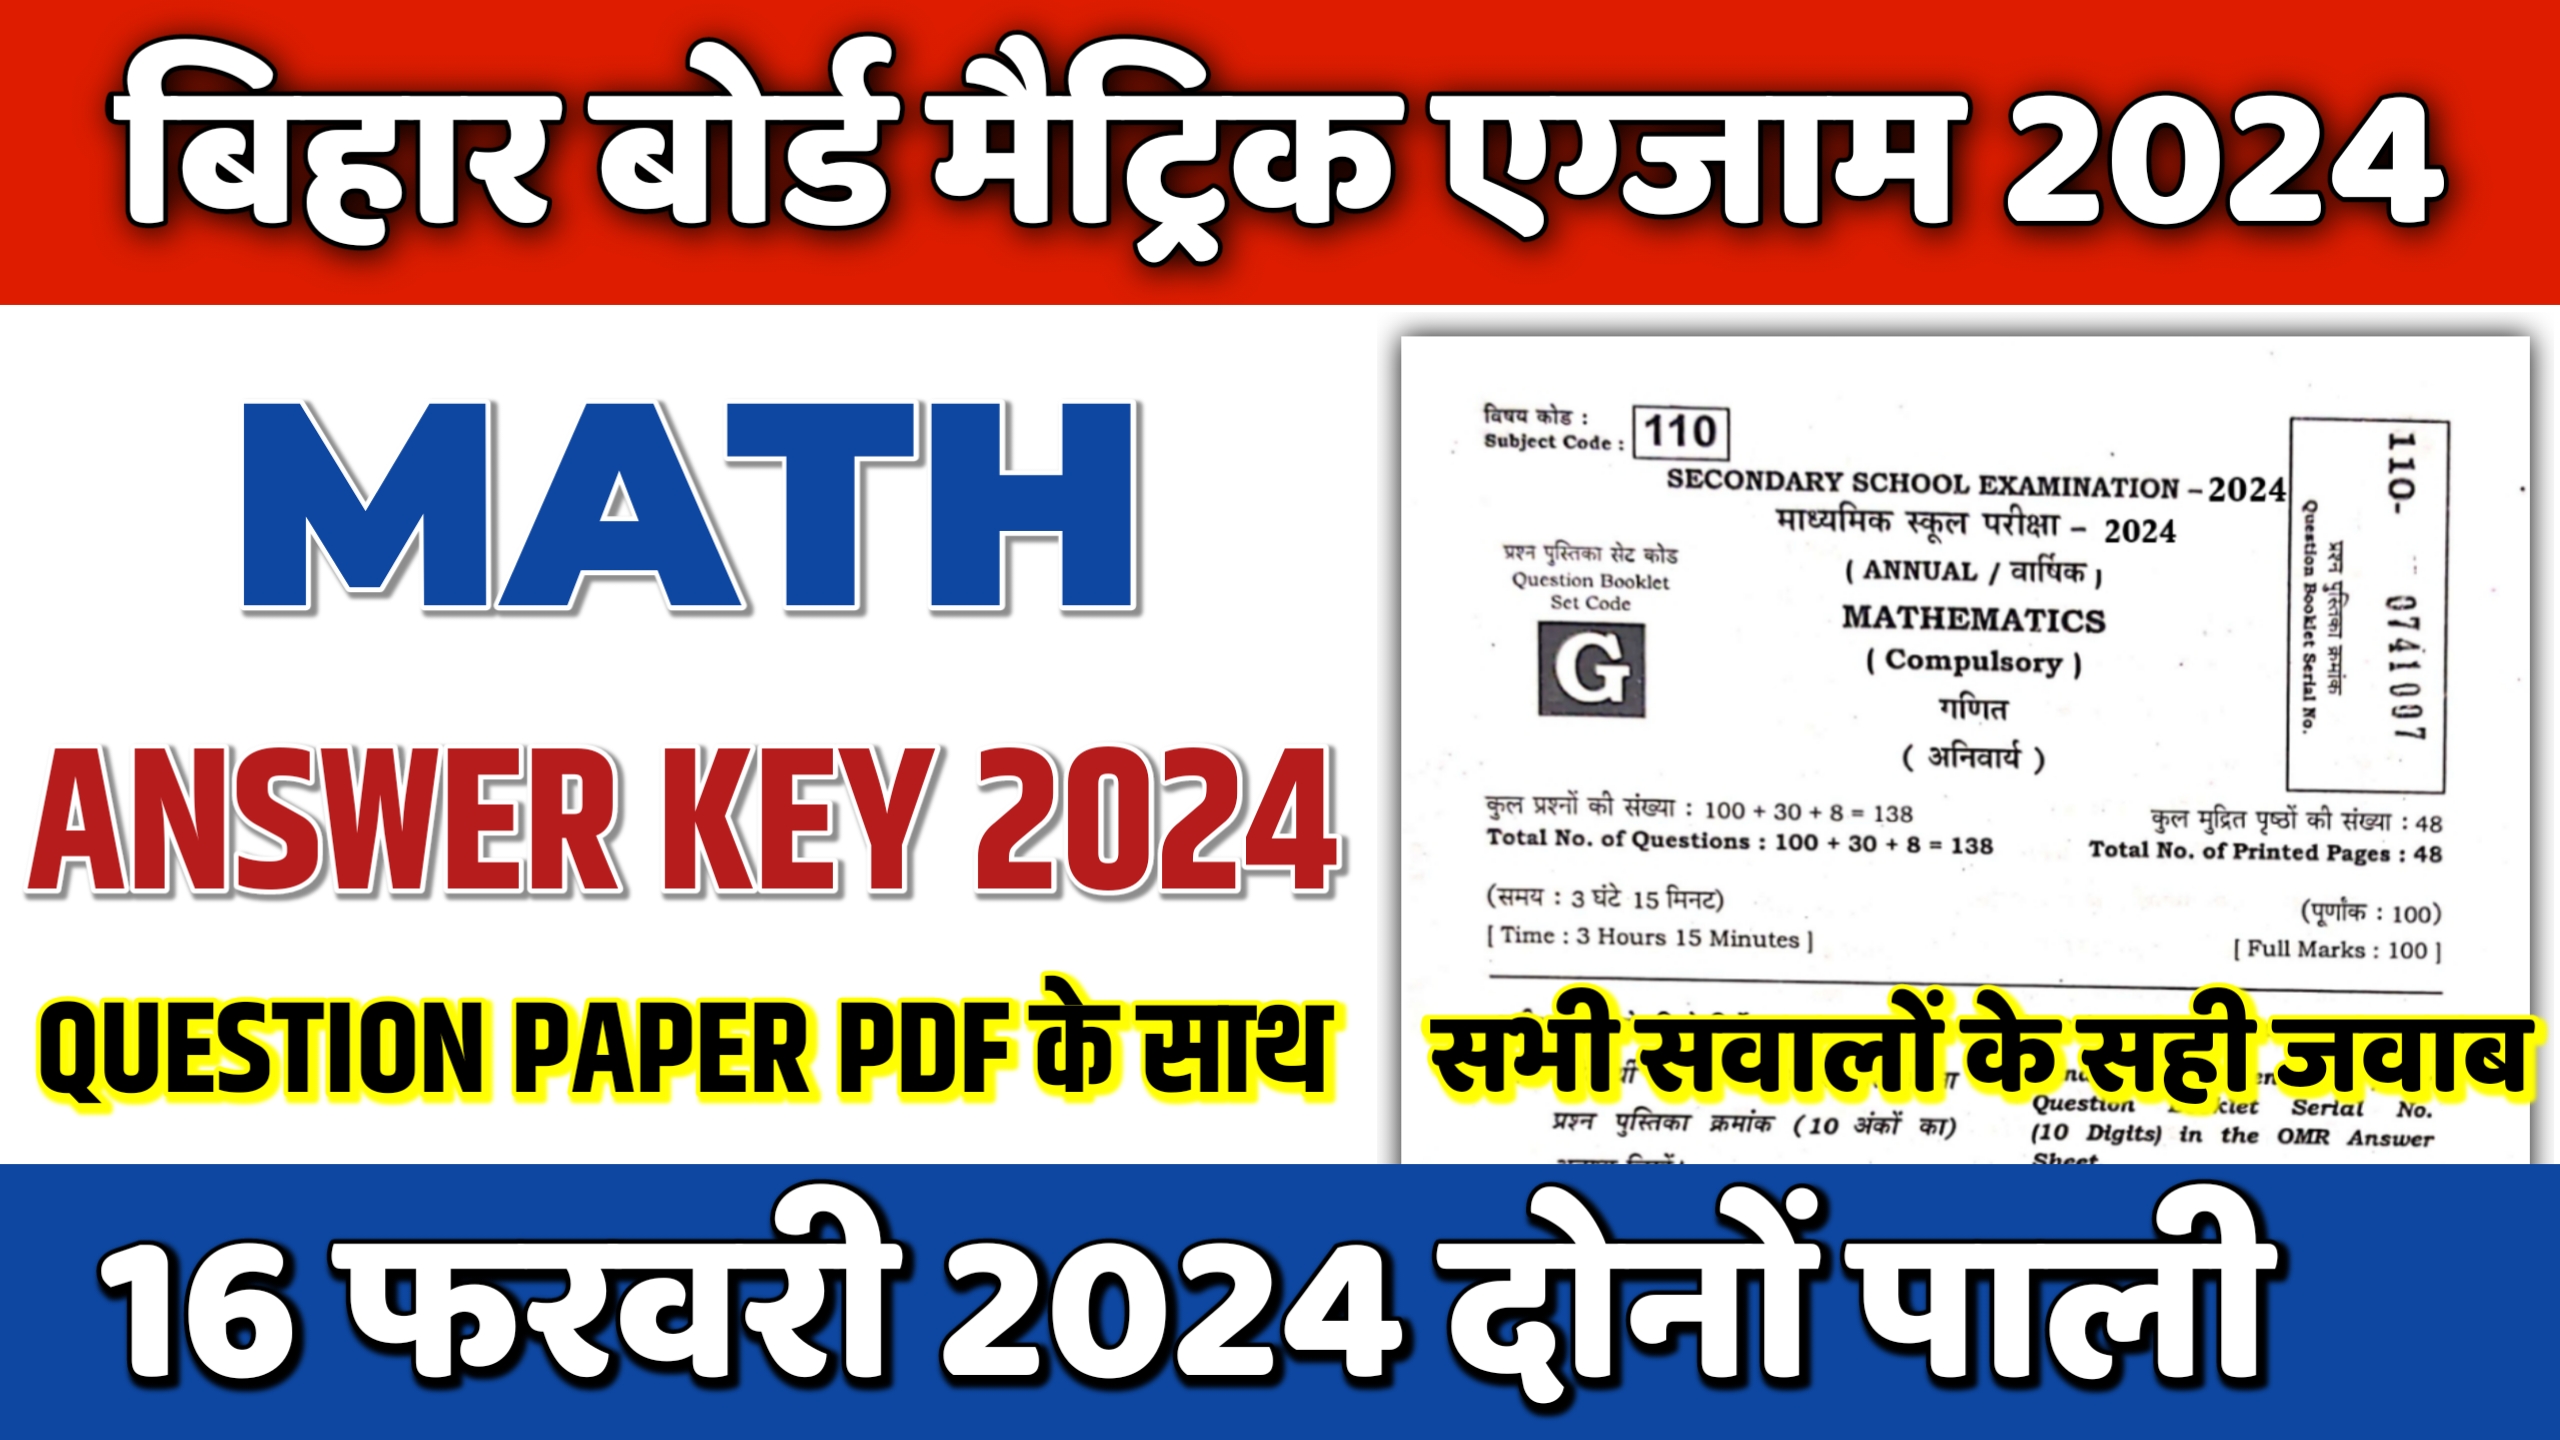 bihar board matric 10th Math answer key 2024 with question paper pdf